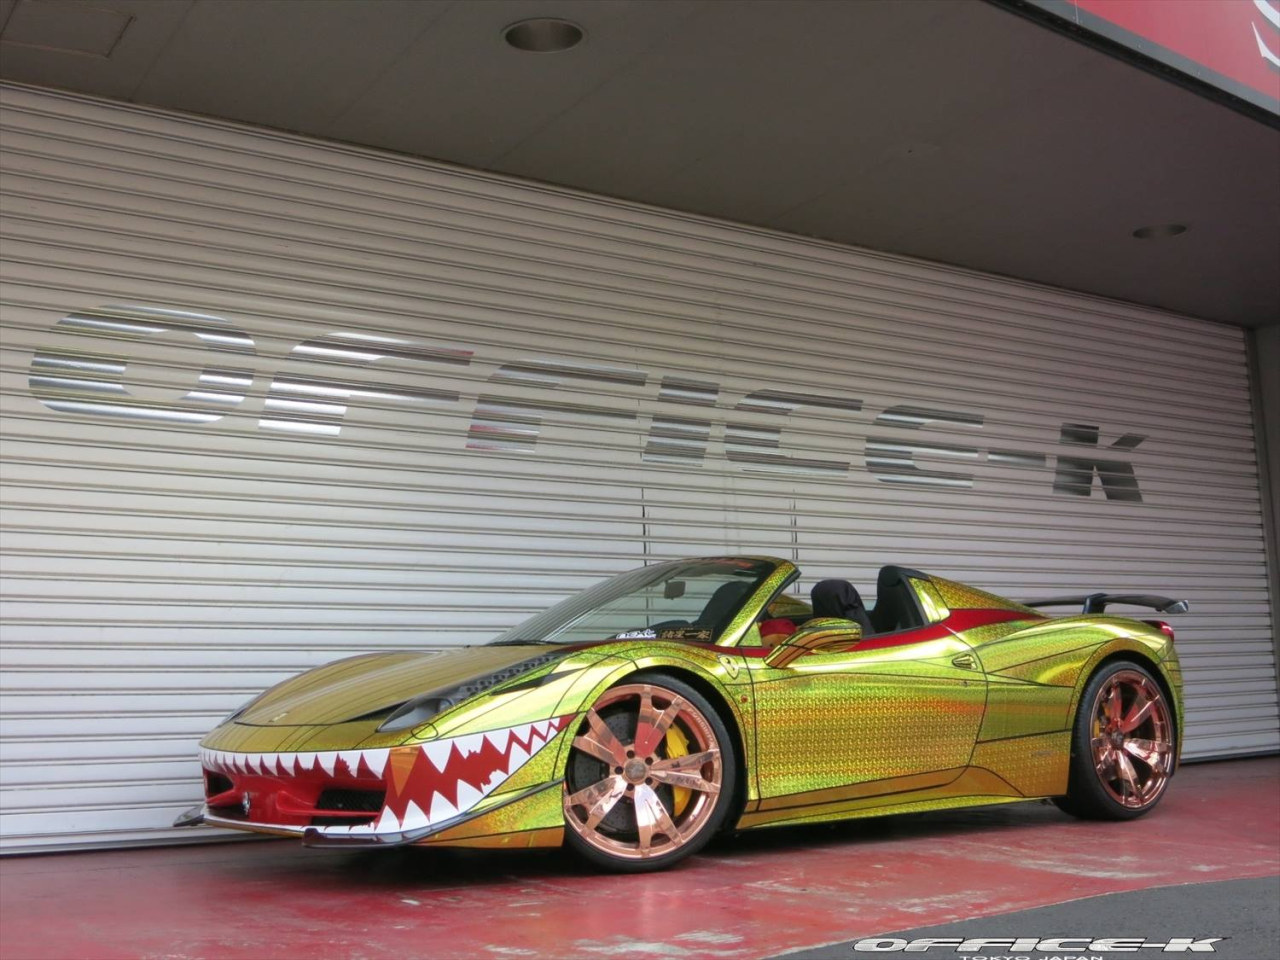 Ferrari 458 Spider Golden Shark van Office-K oogt bizar